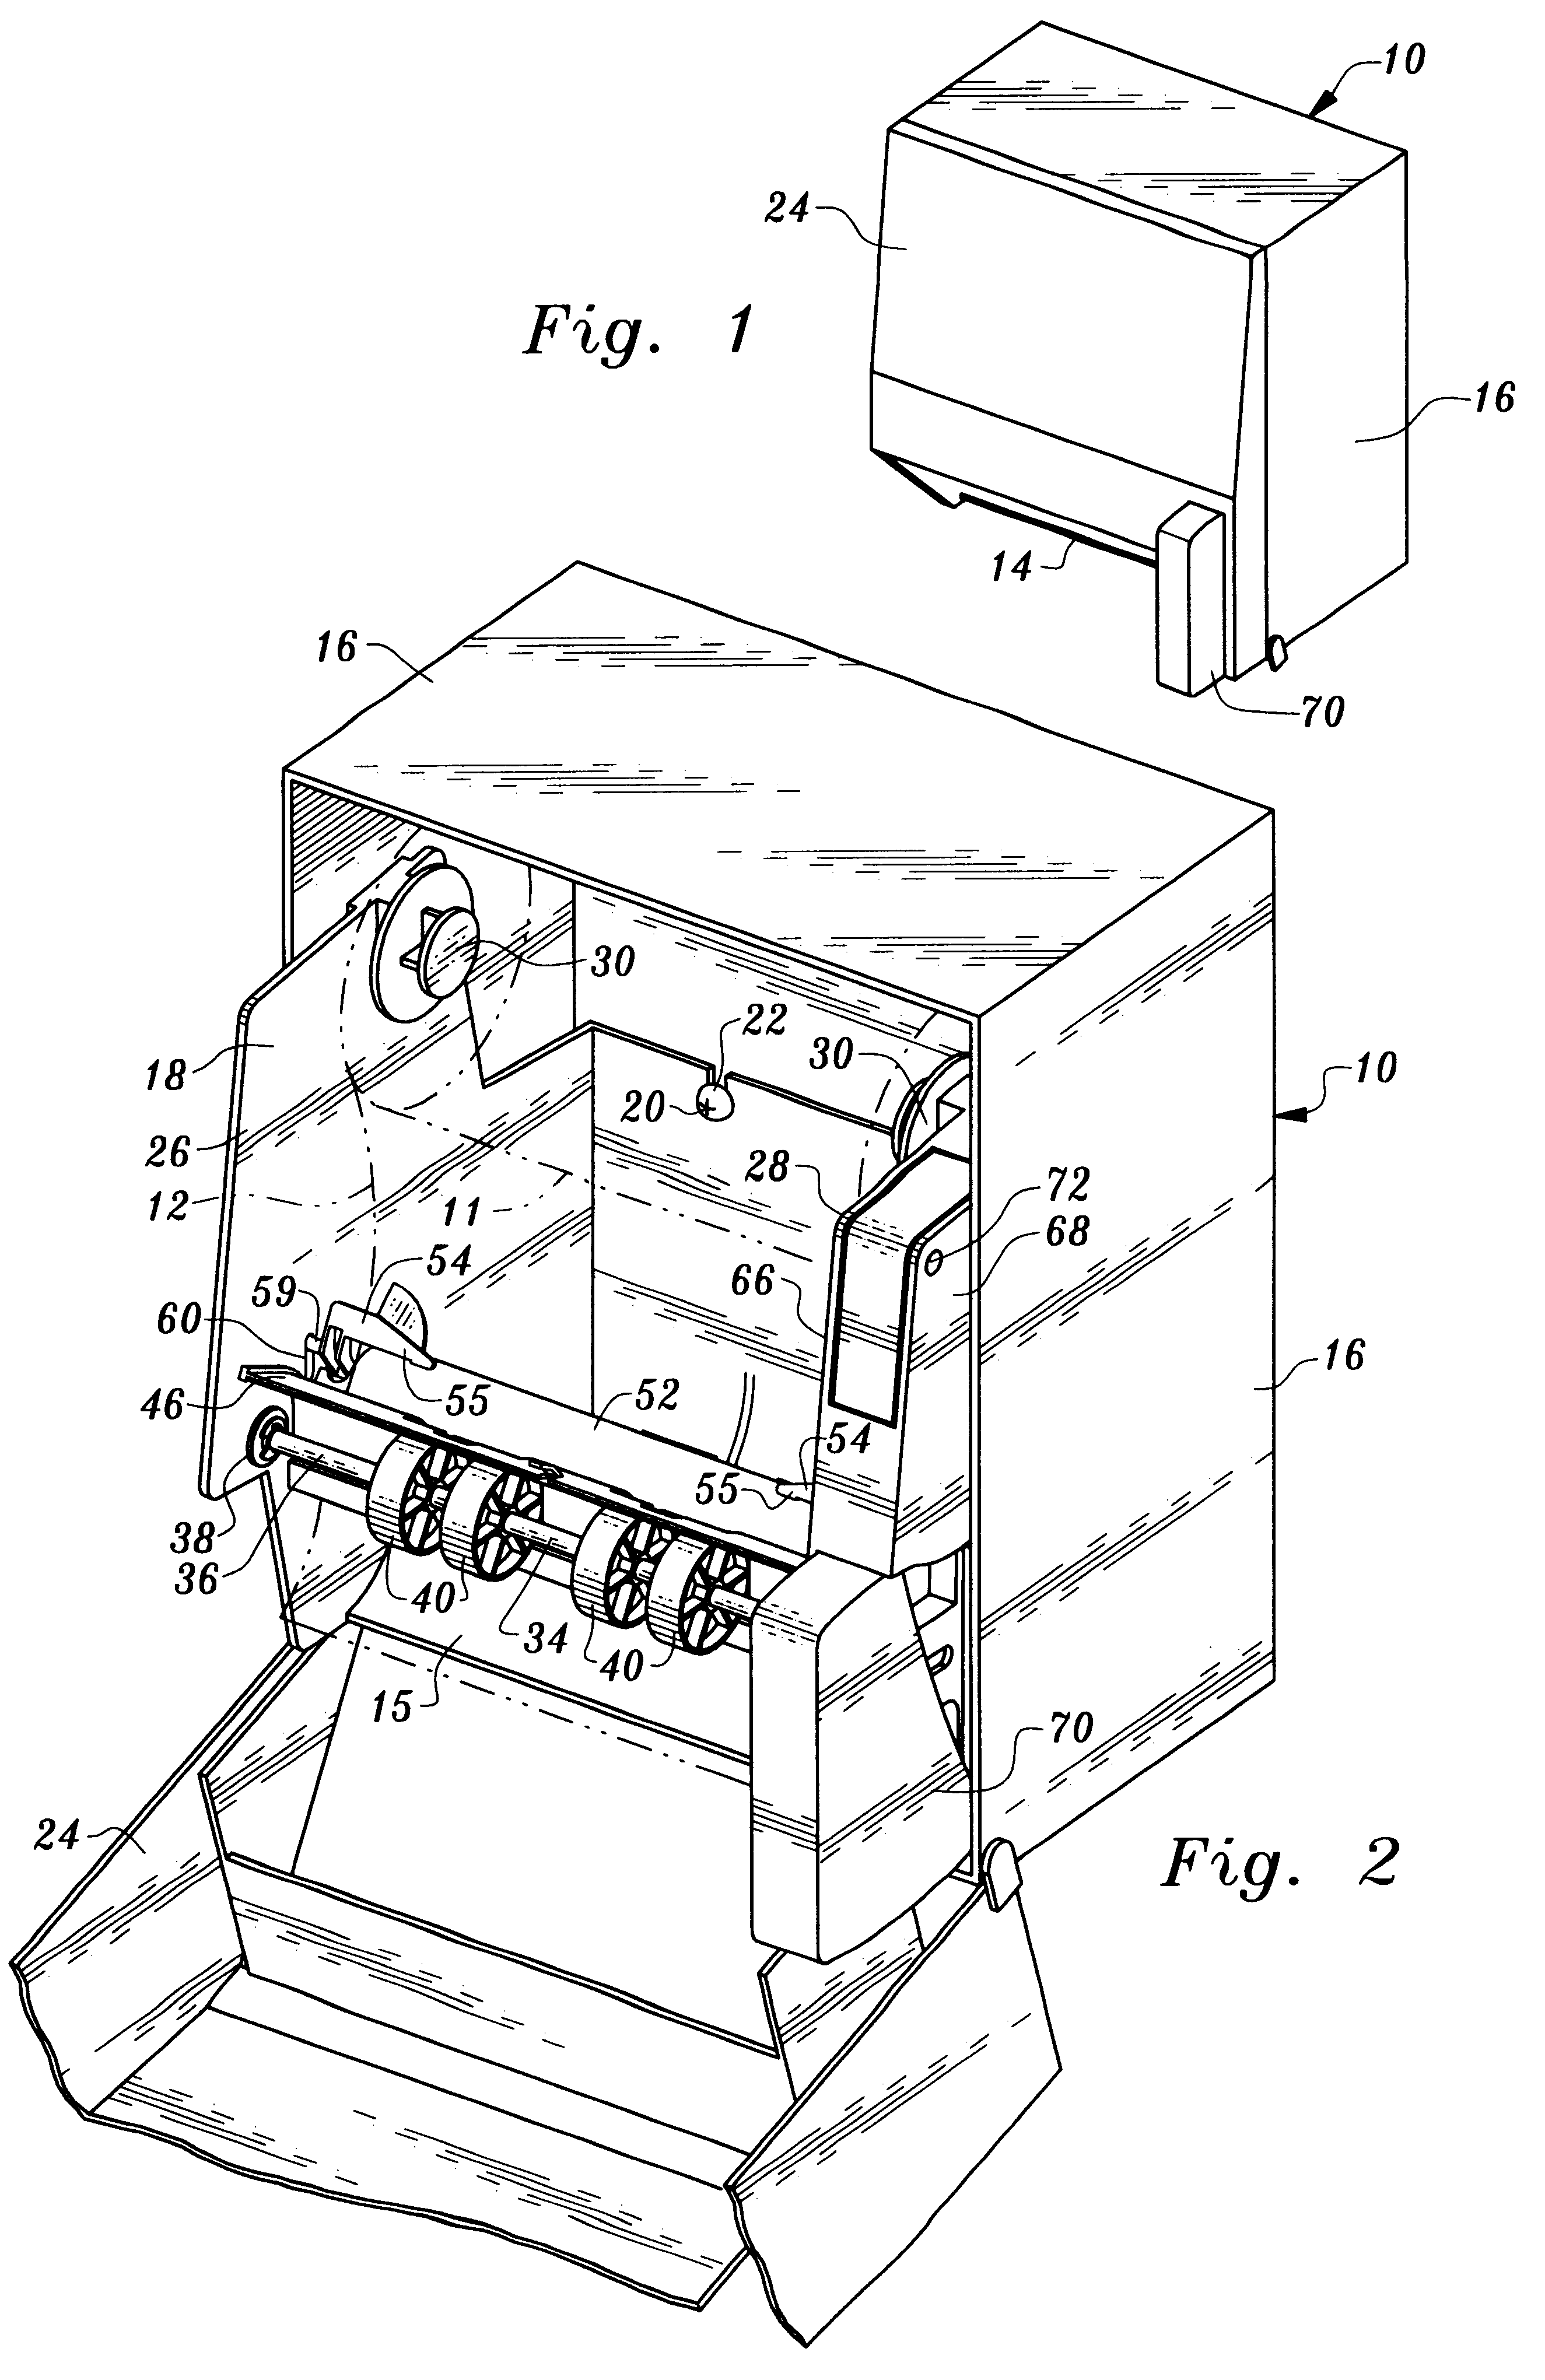 Paper towel transfer apparatus